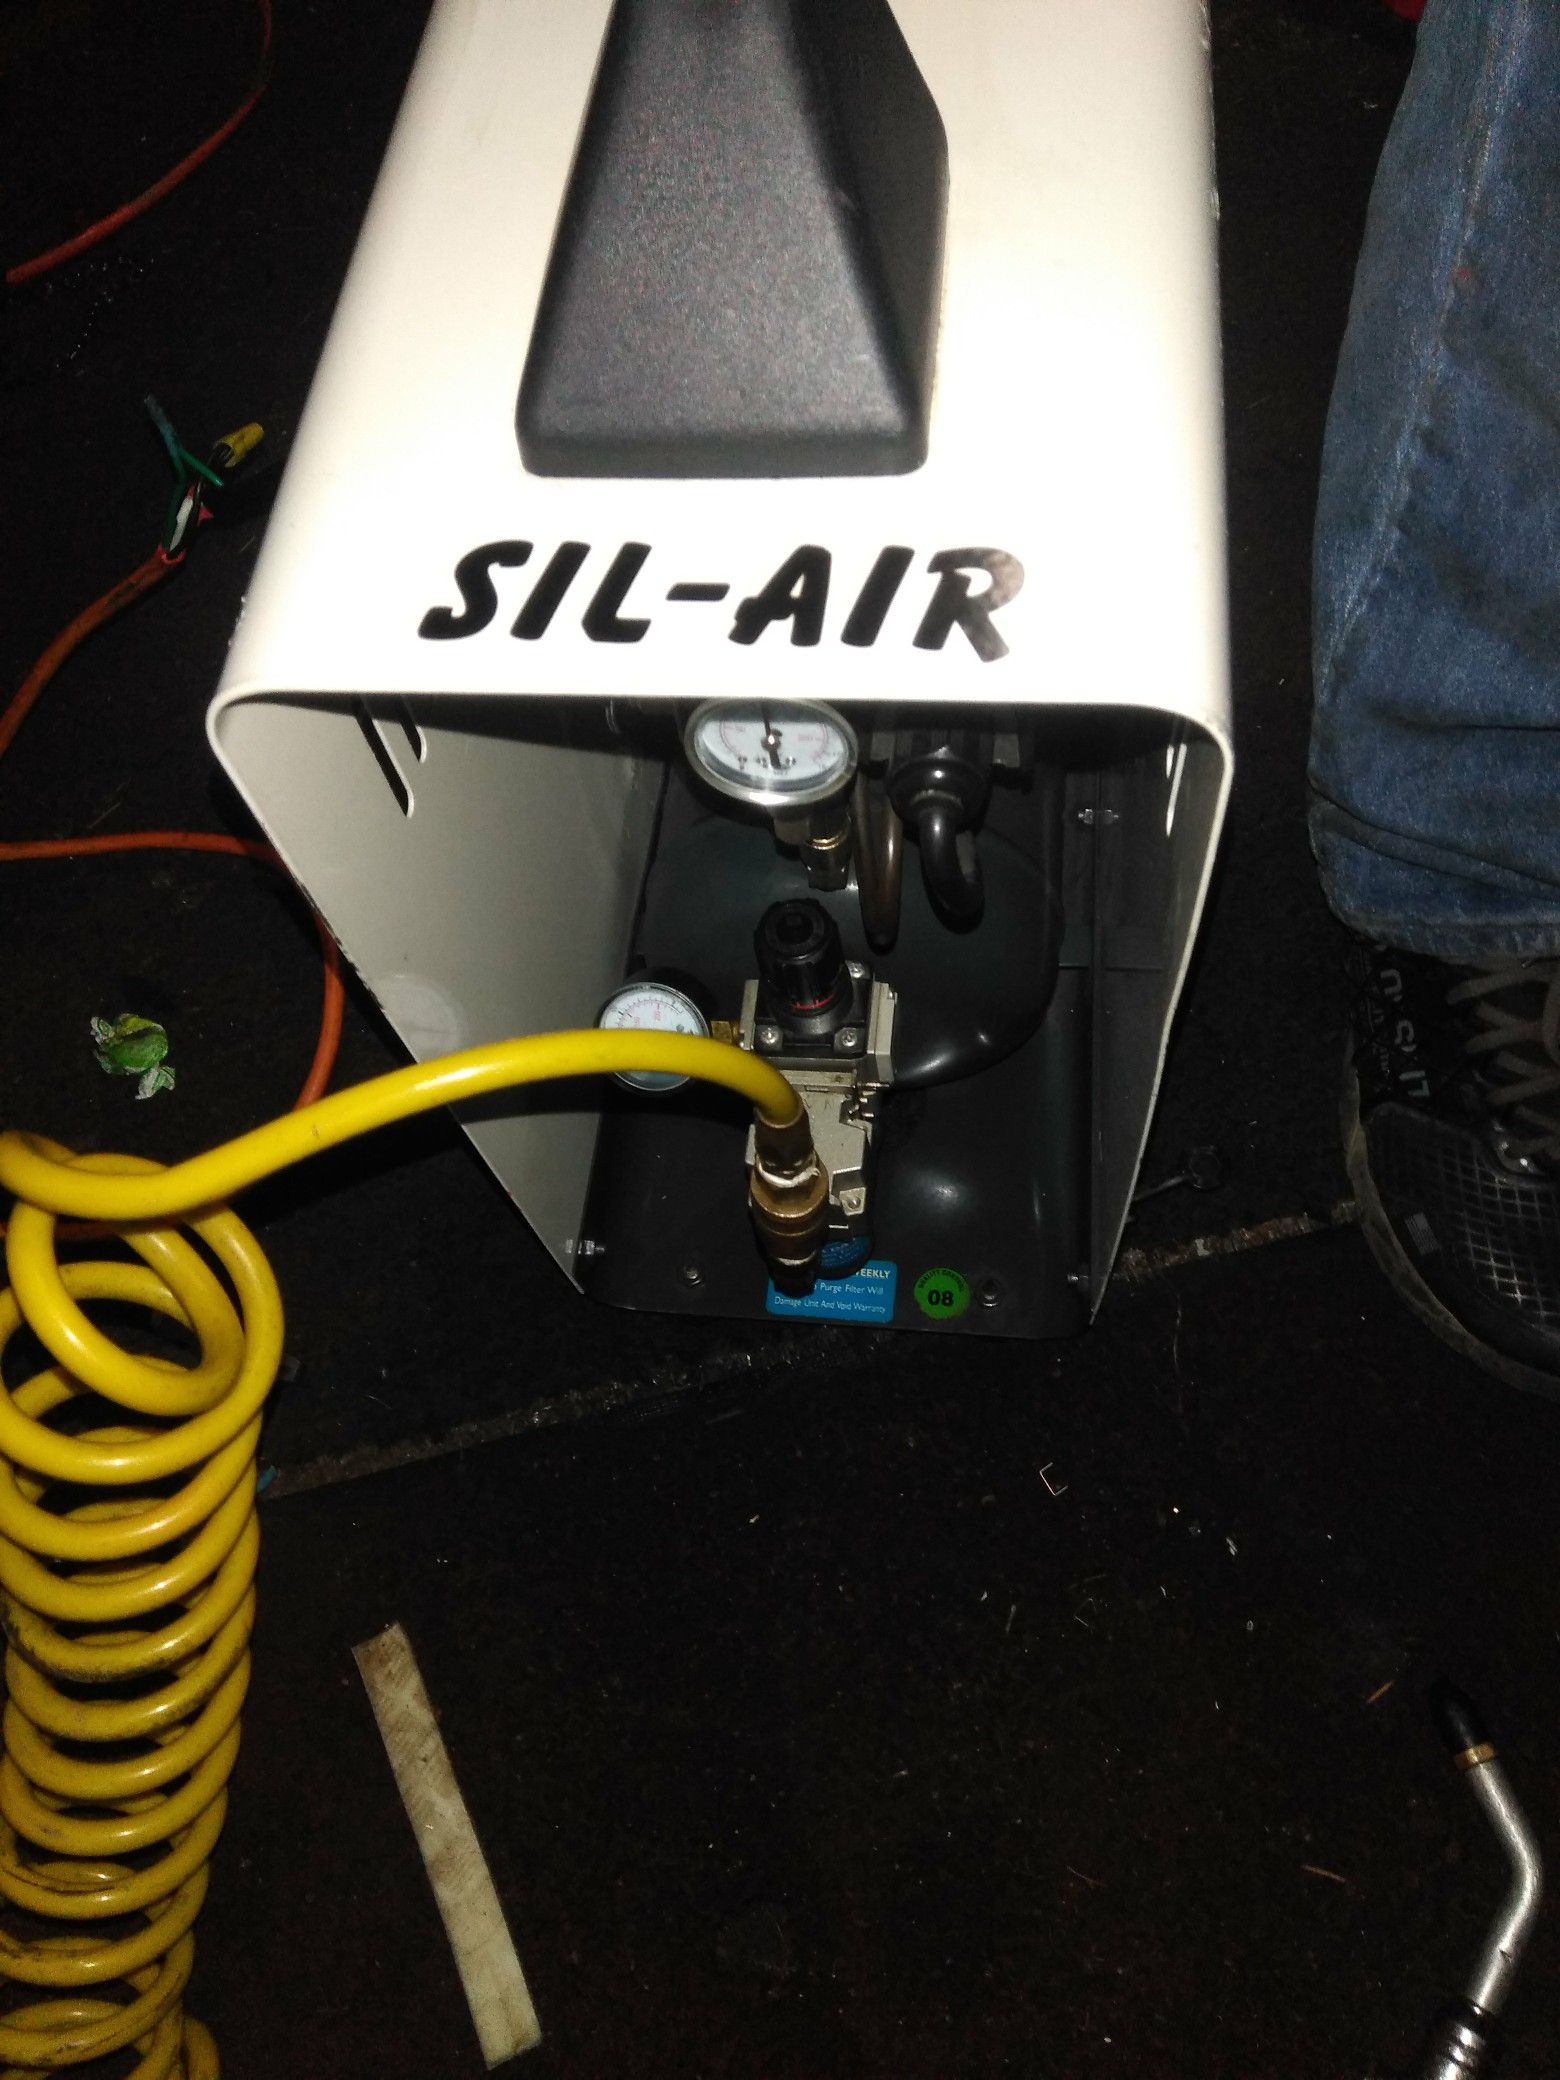 Sil-air m mini portable air compressor airbrushing 43 decibels it's quiet as a clock if not quieter